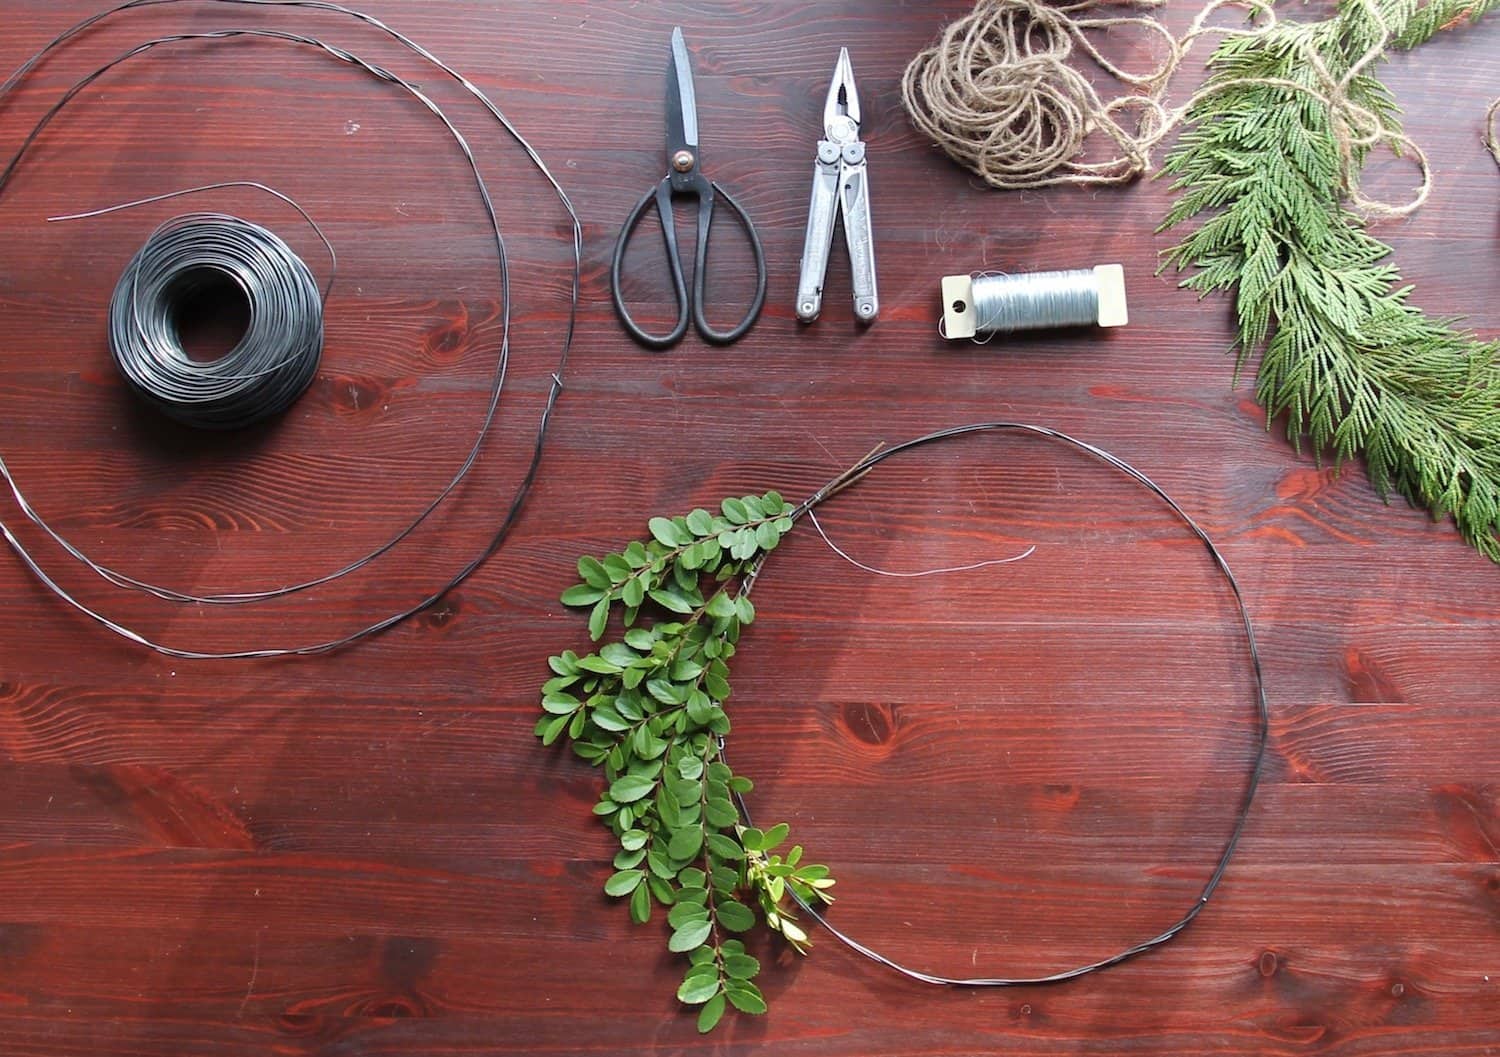 Minimalist wreath tutorial - supplies for simple greenery hoop wreath